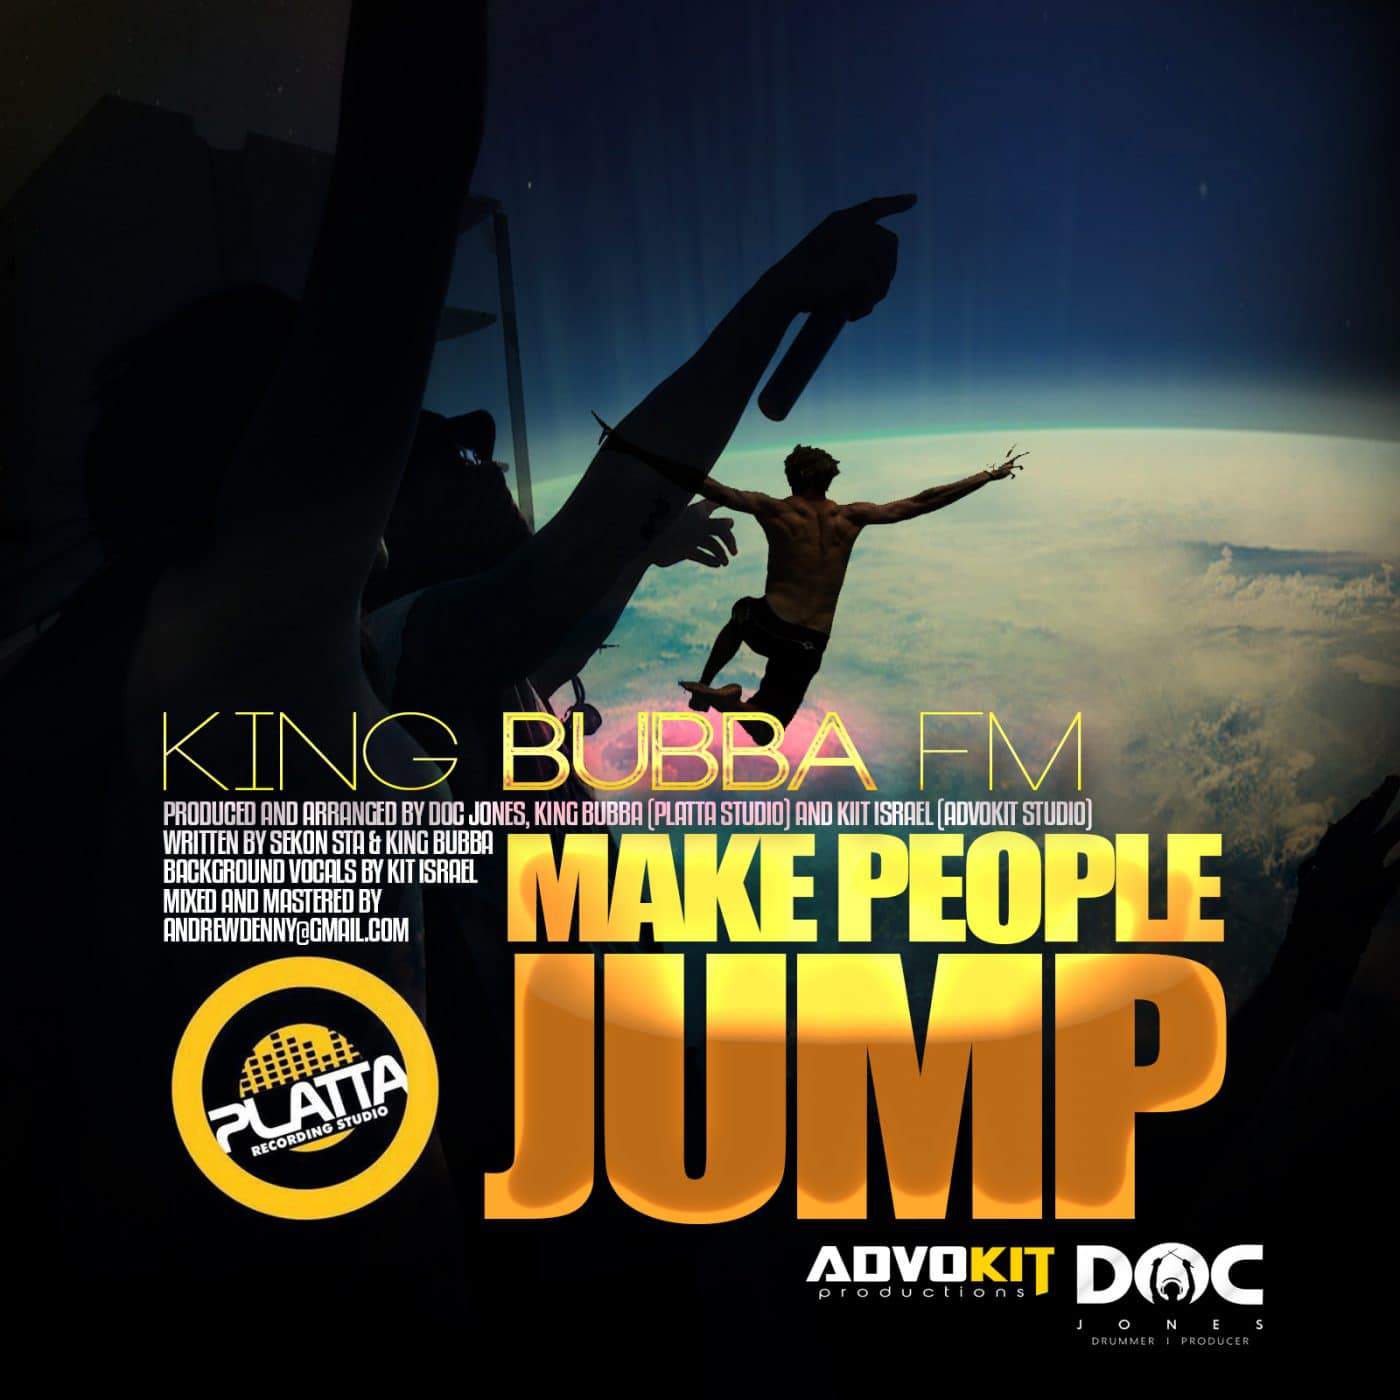 King Bubba FM - Make People Jump - Doc Jones, Platta Studio & Advokit Studio